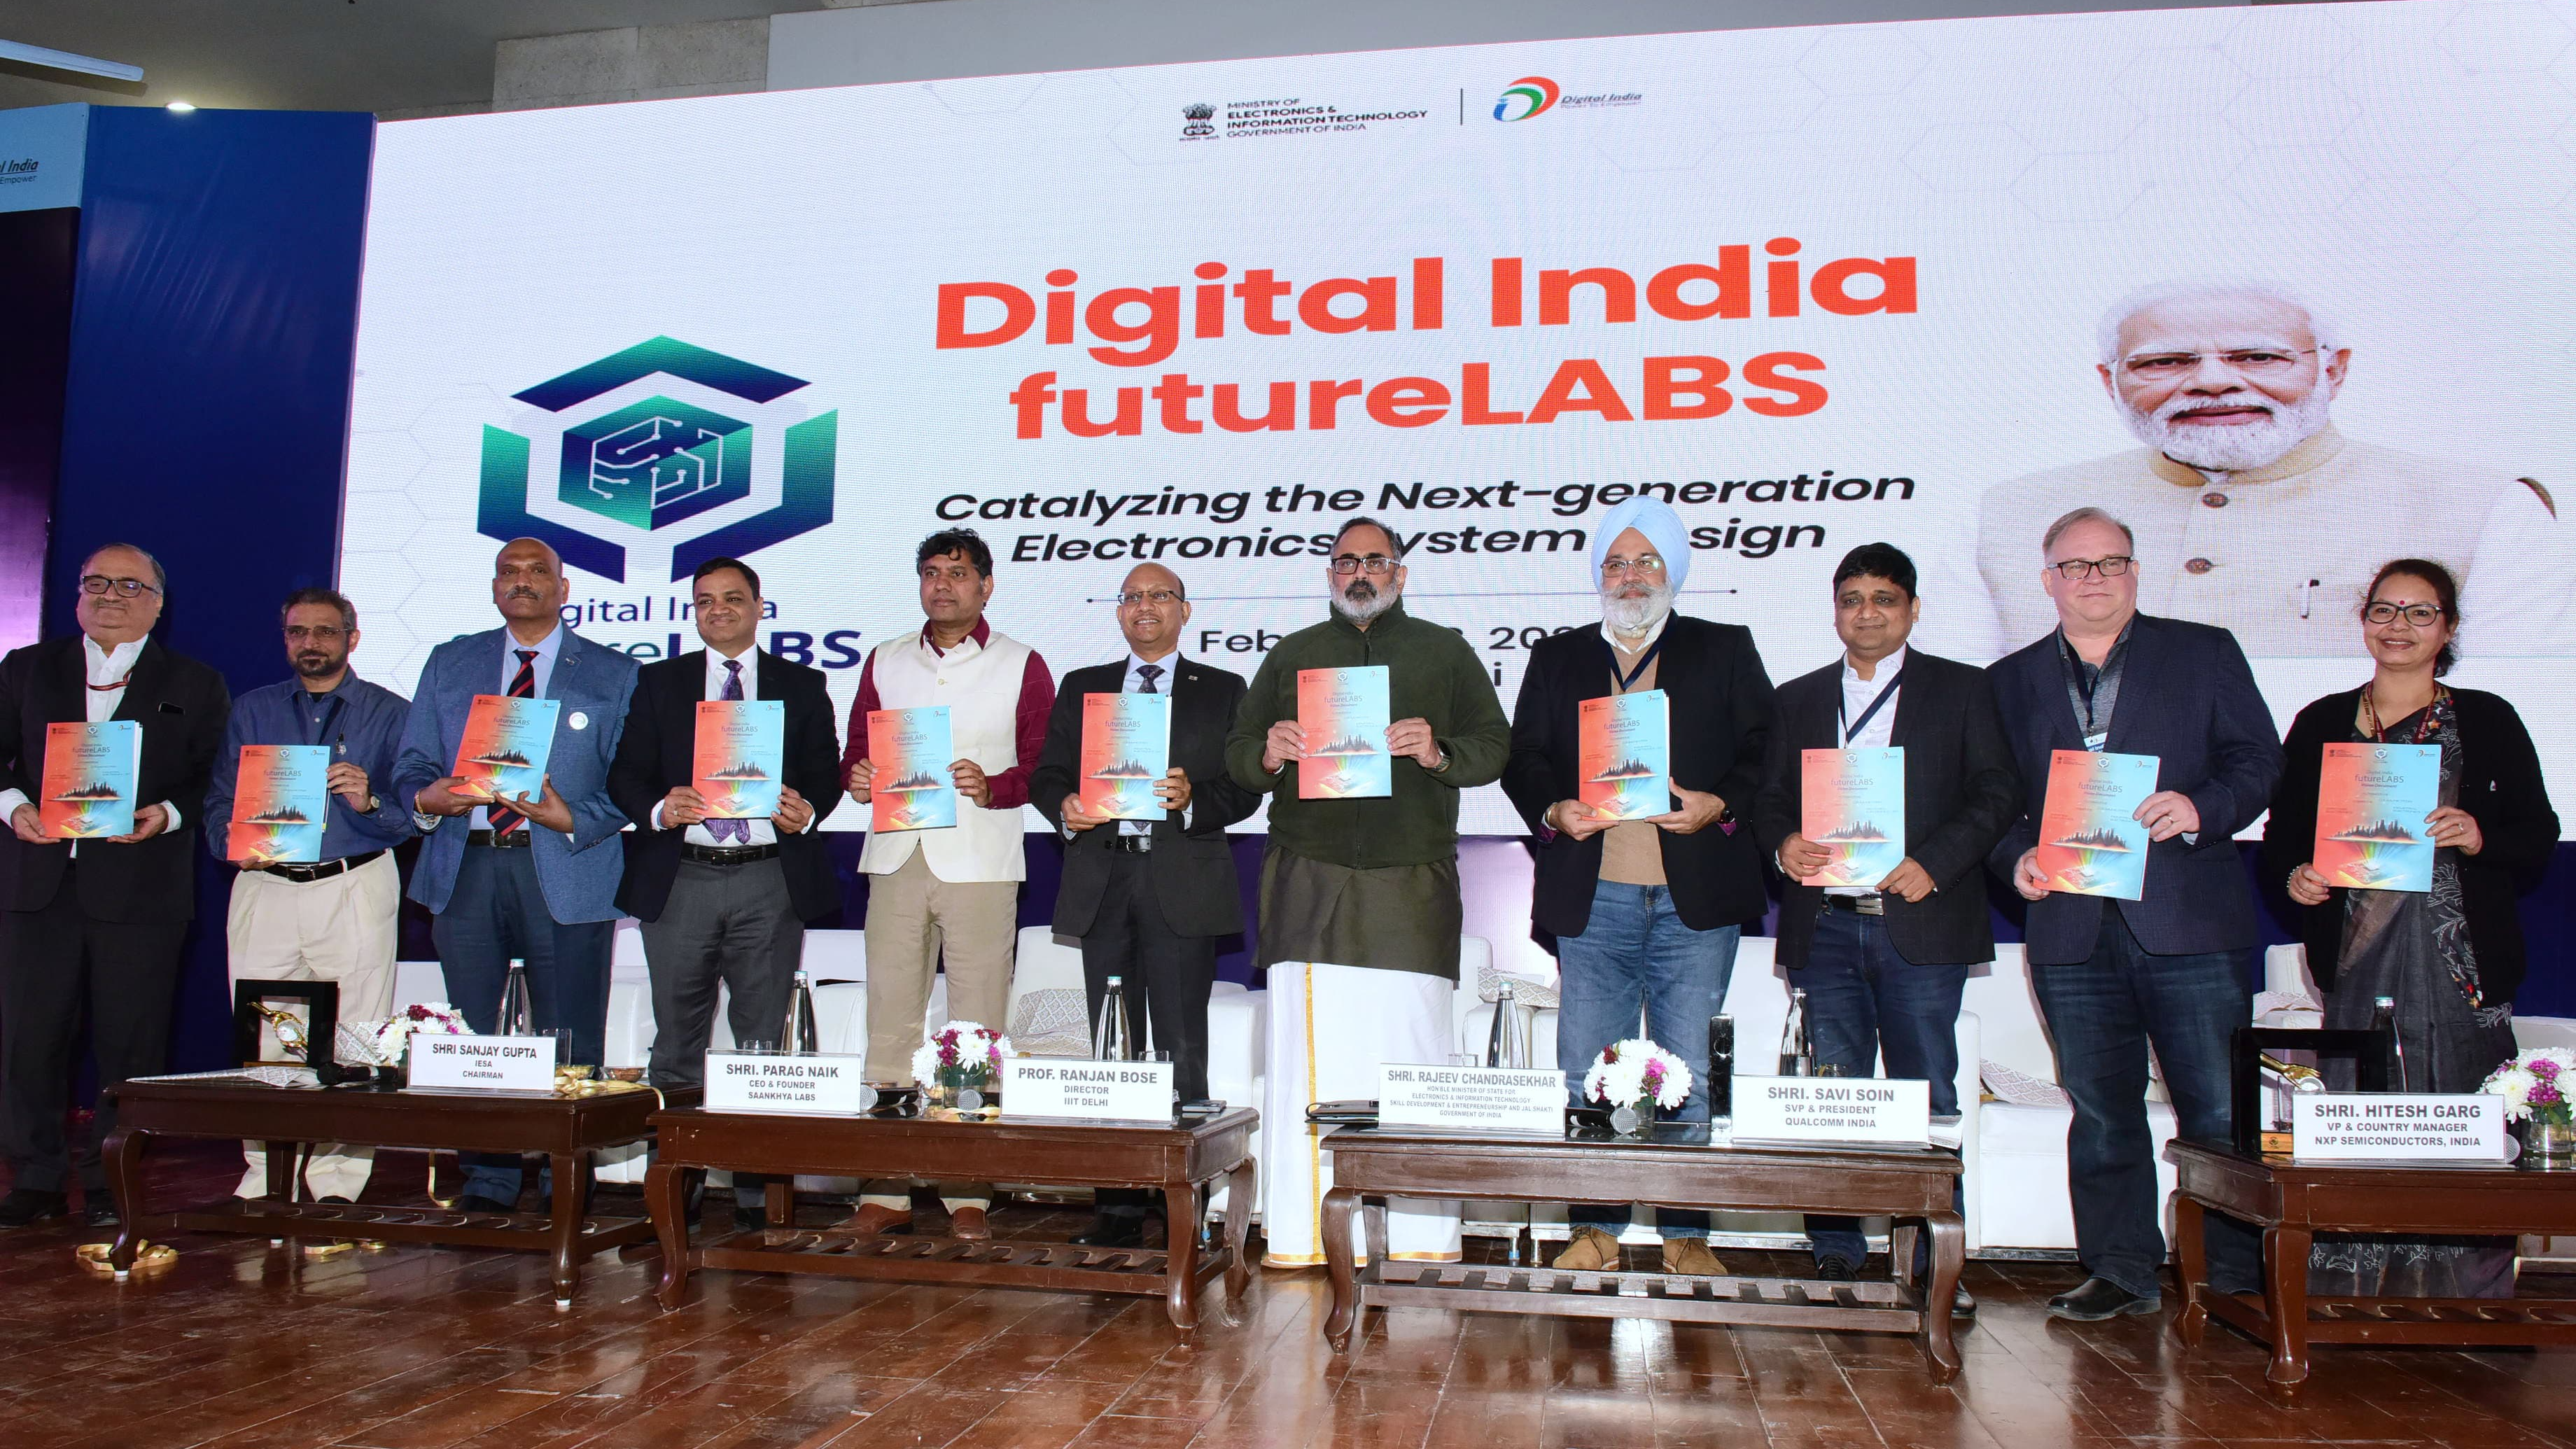 Union Minister inaugurates Digital India FutureLABS at IIIT in New Delhi